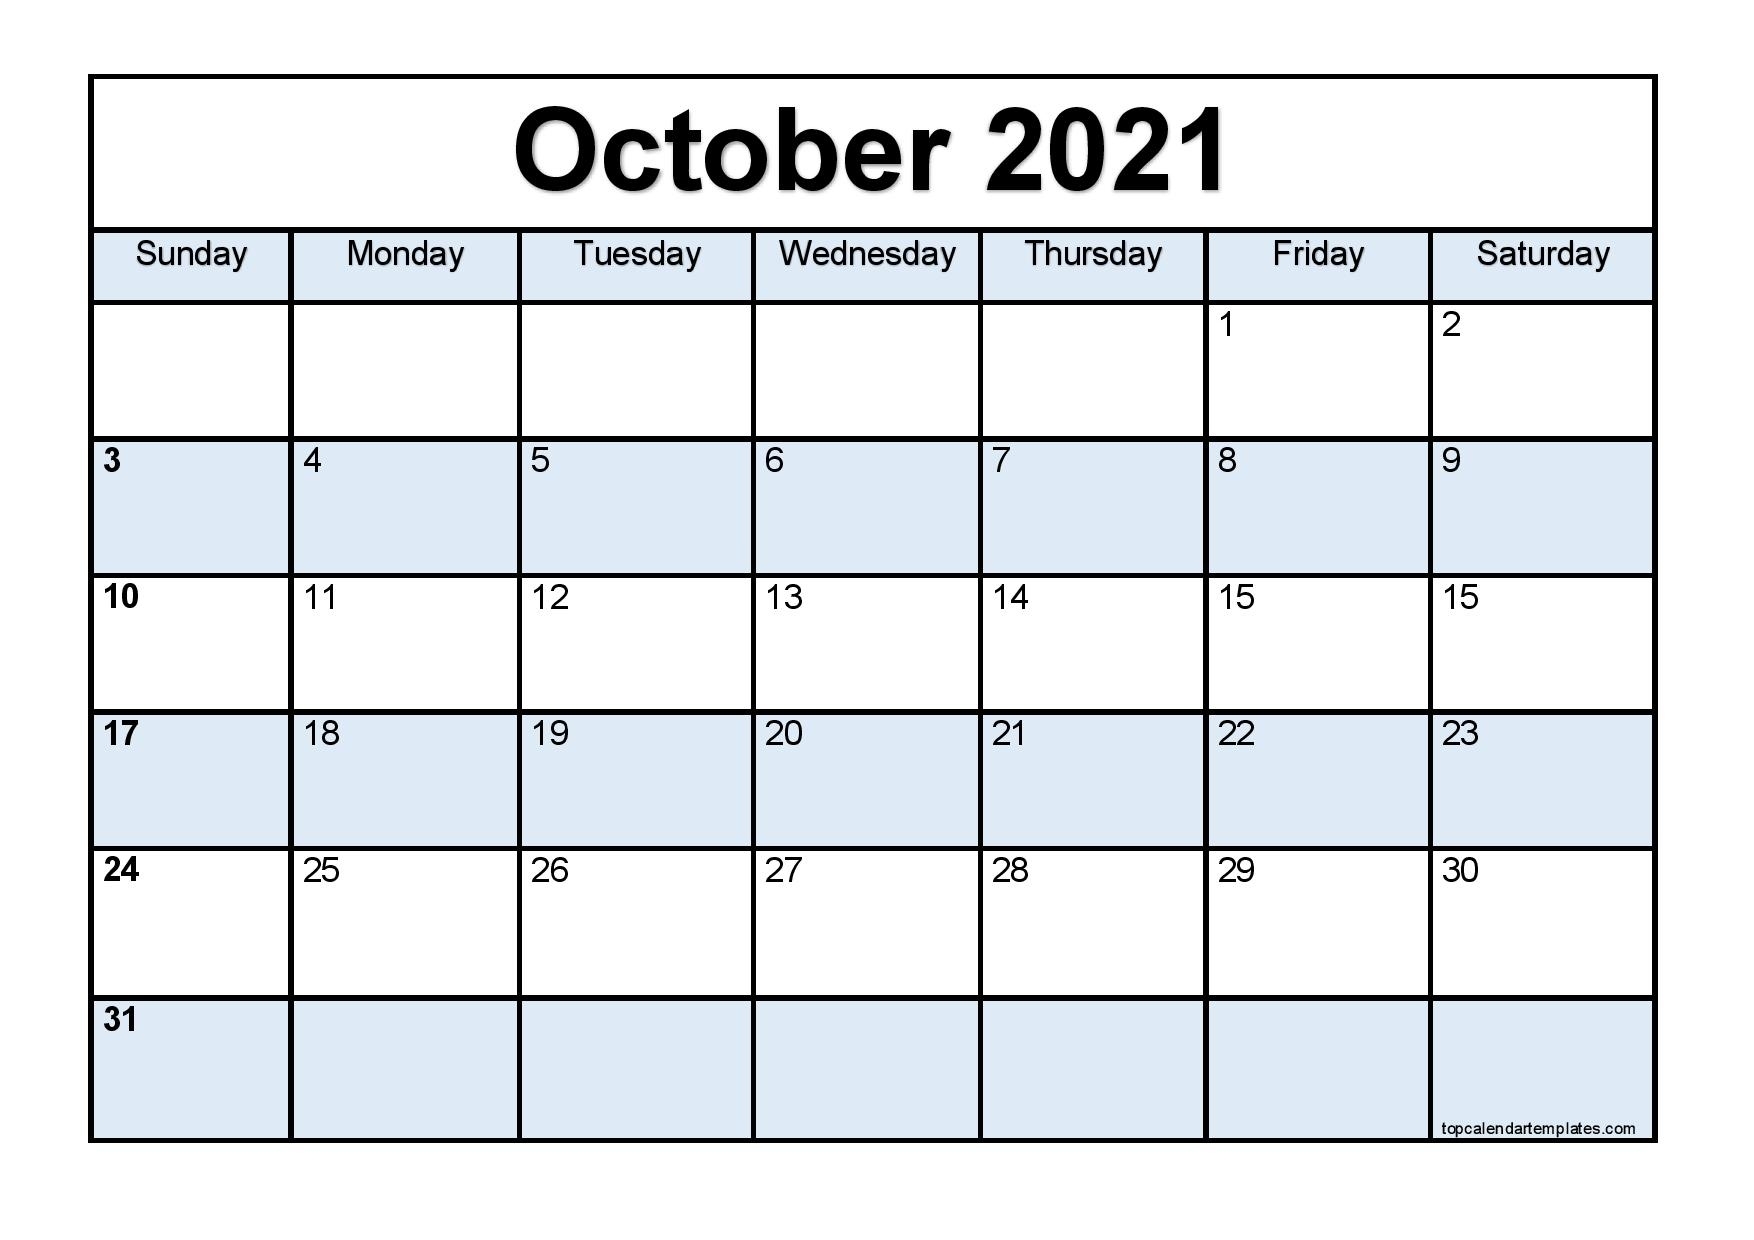 Free October 2021 Printable Calendar - Monthly Templates 2021 Calendar Of October